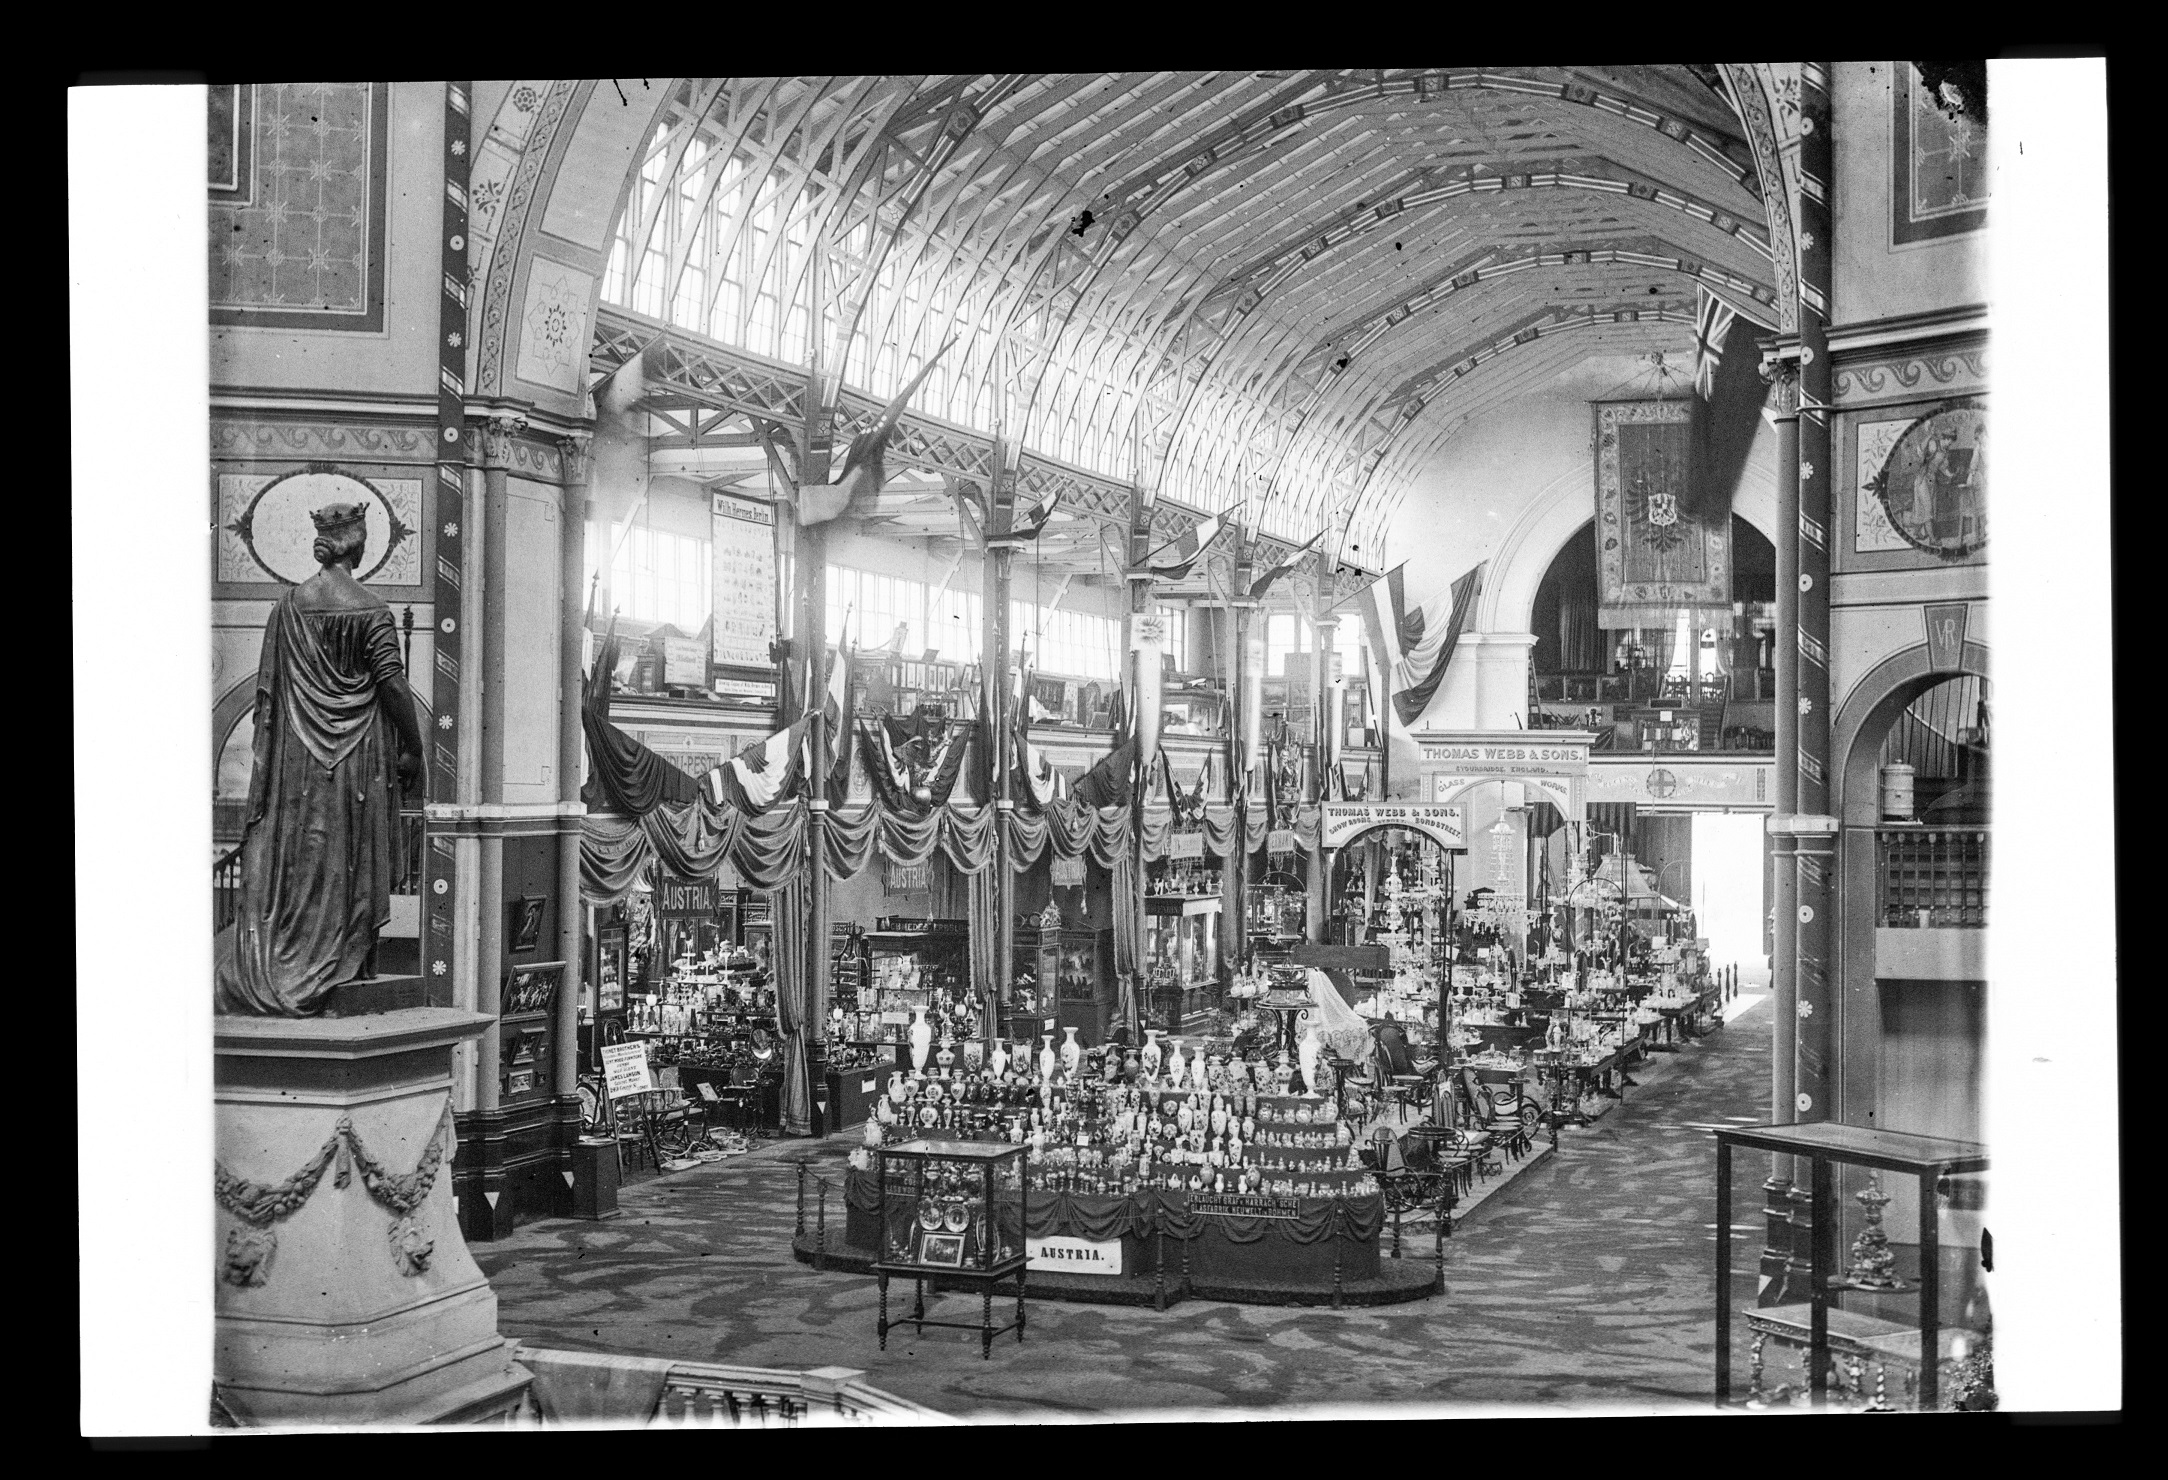 International Exhibition, Sydney, 1879-80: hall of exhibits